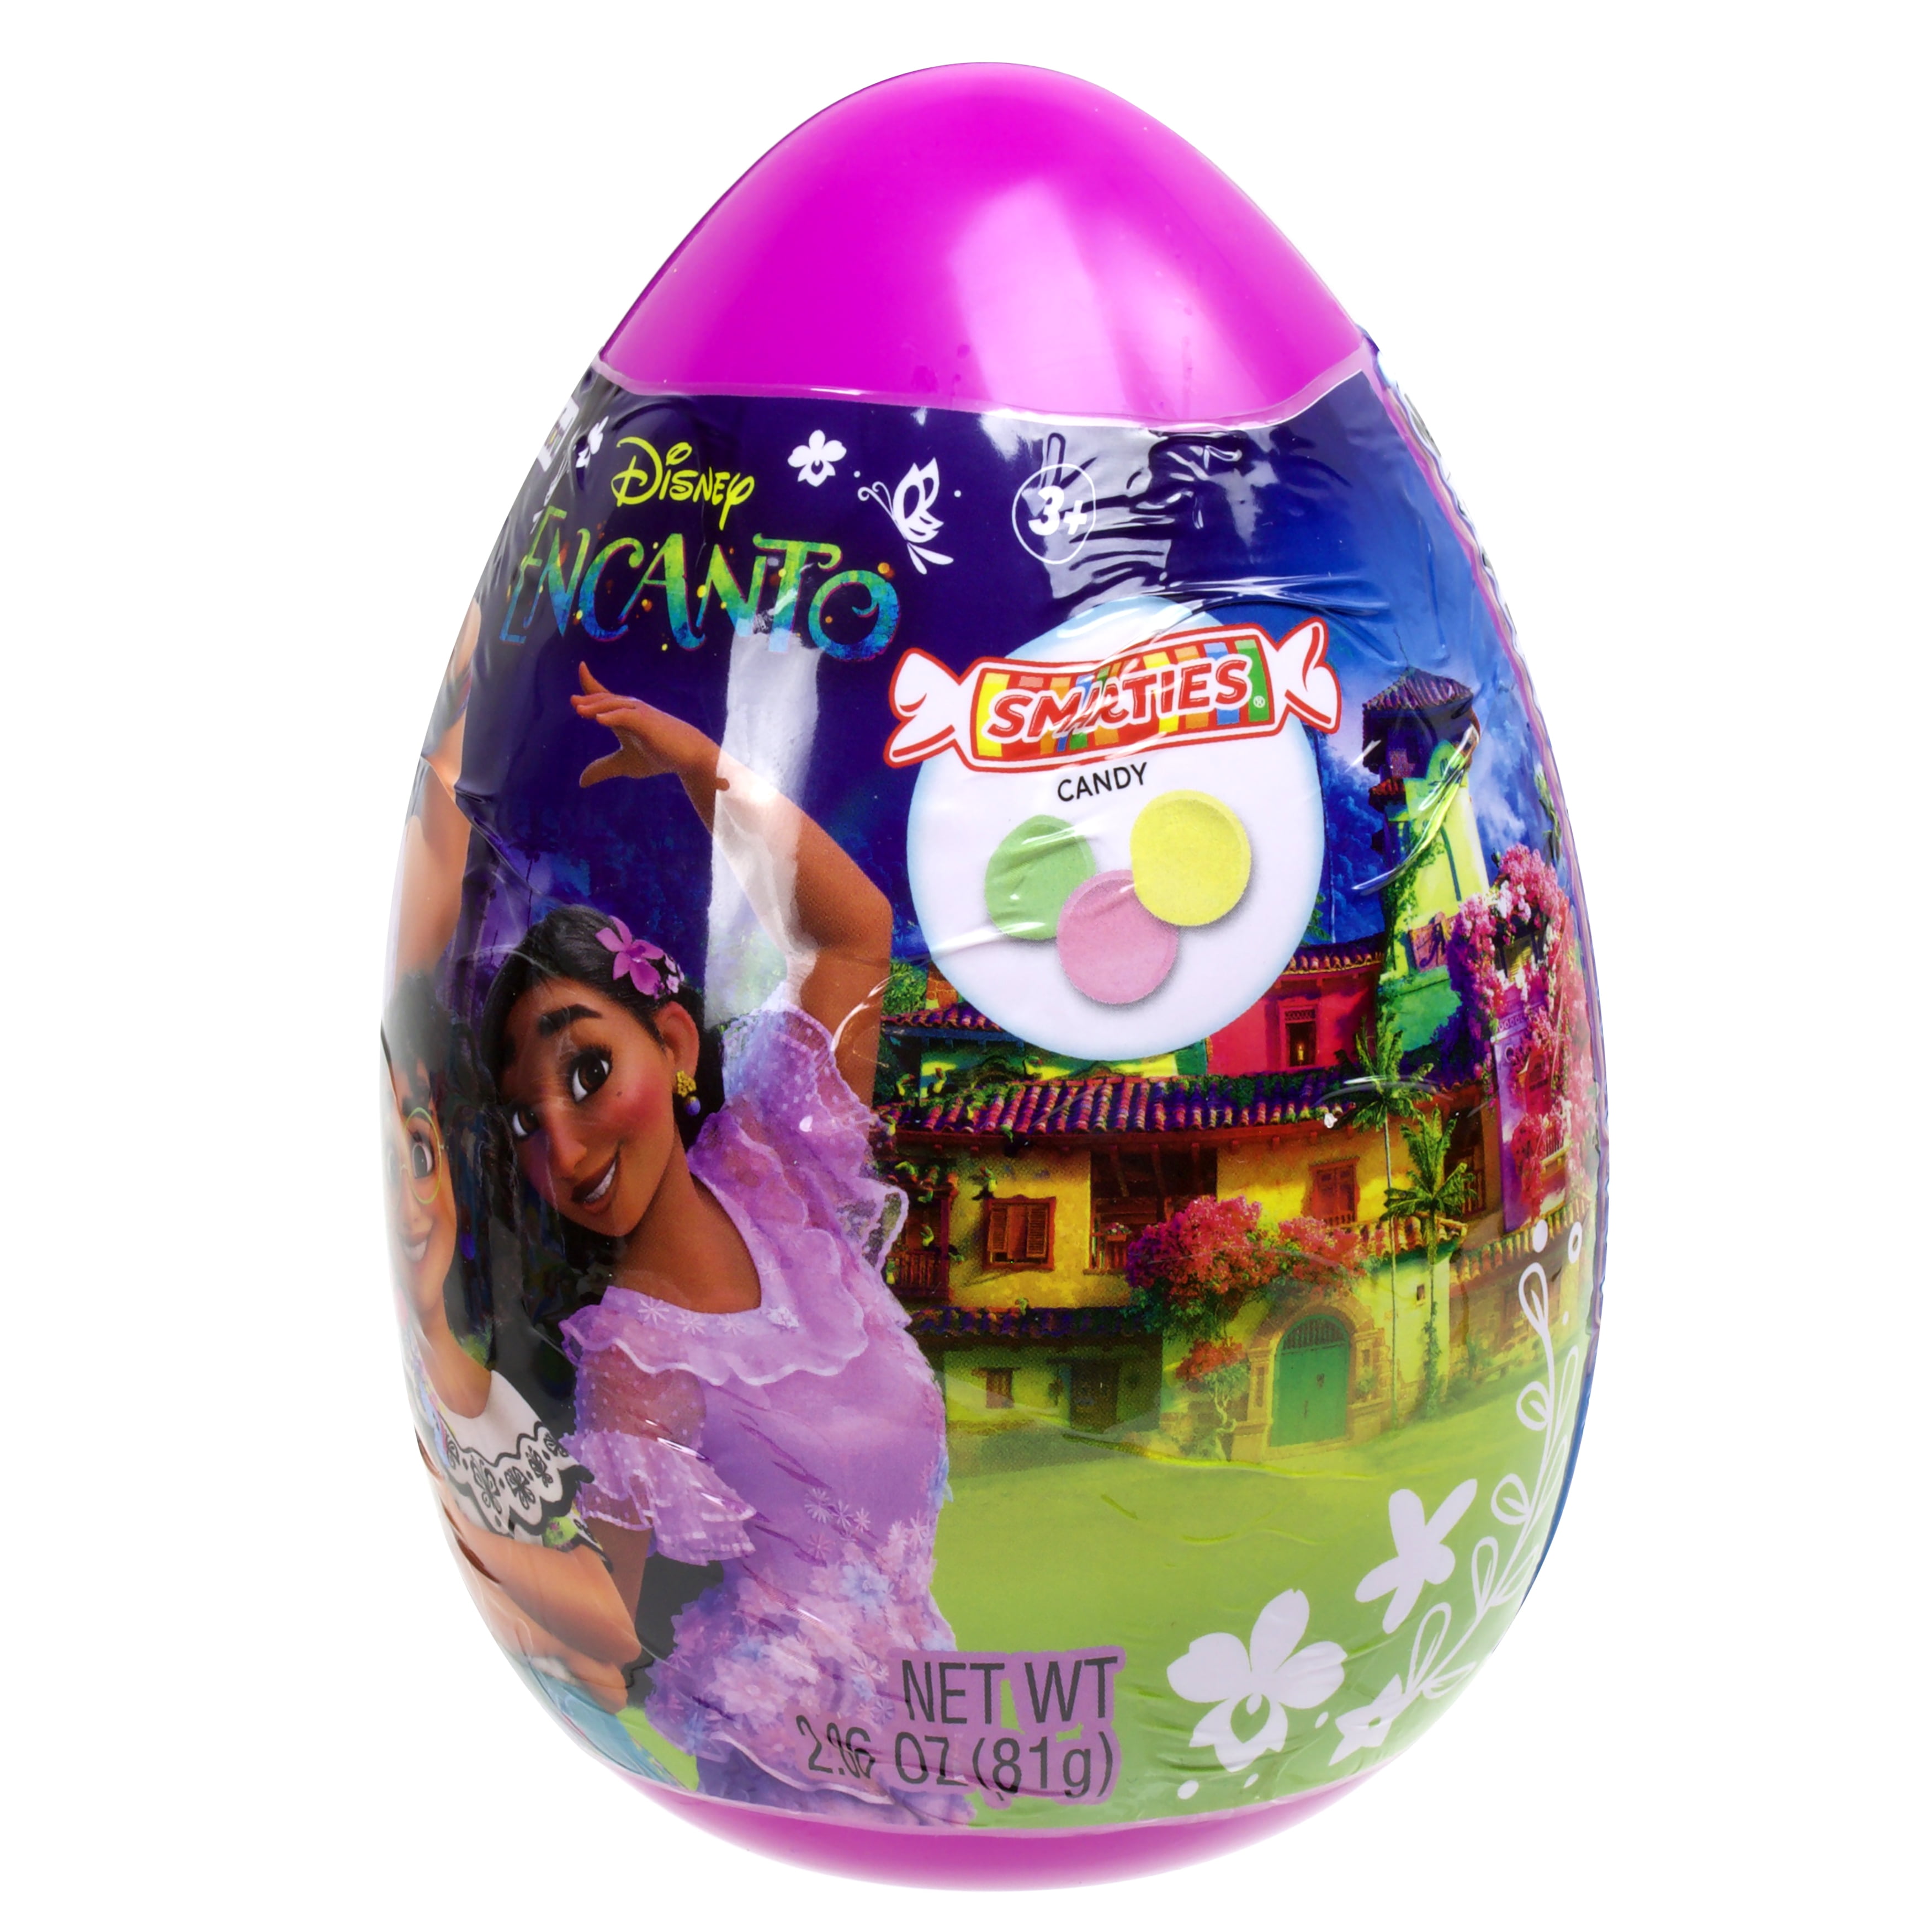 Encanto: Every Disney Easter Egg & Reference